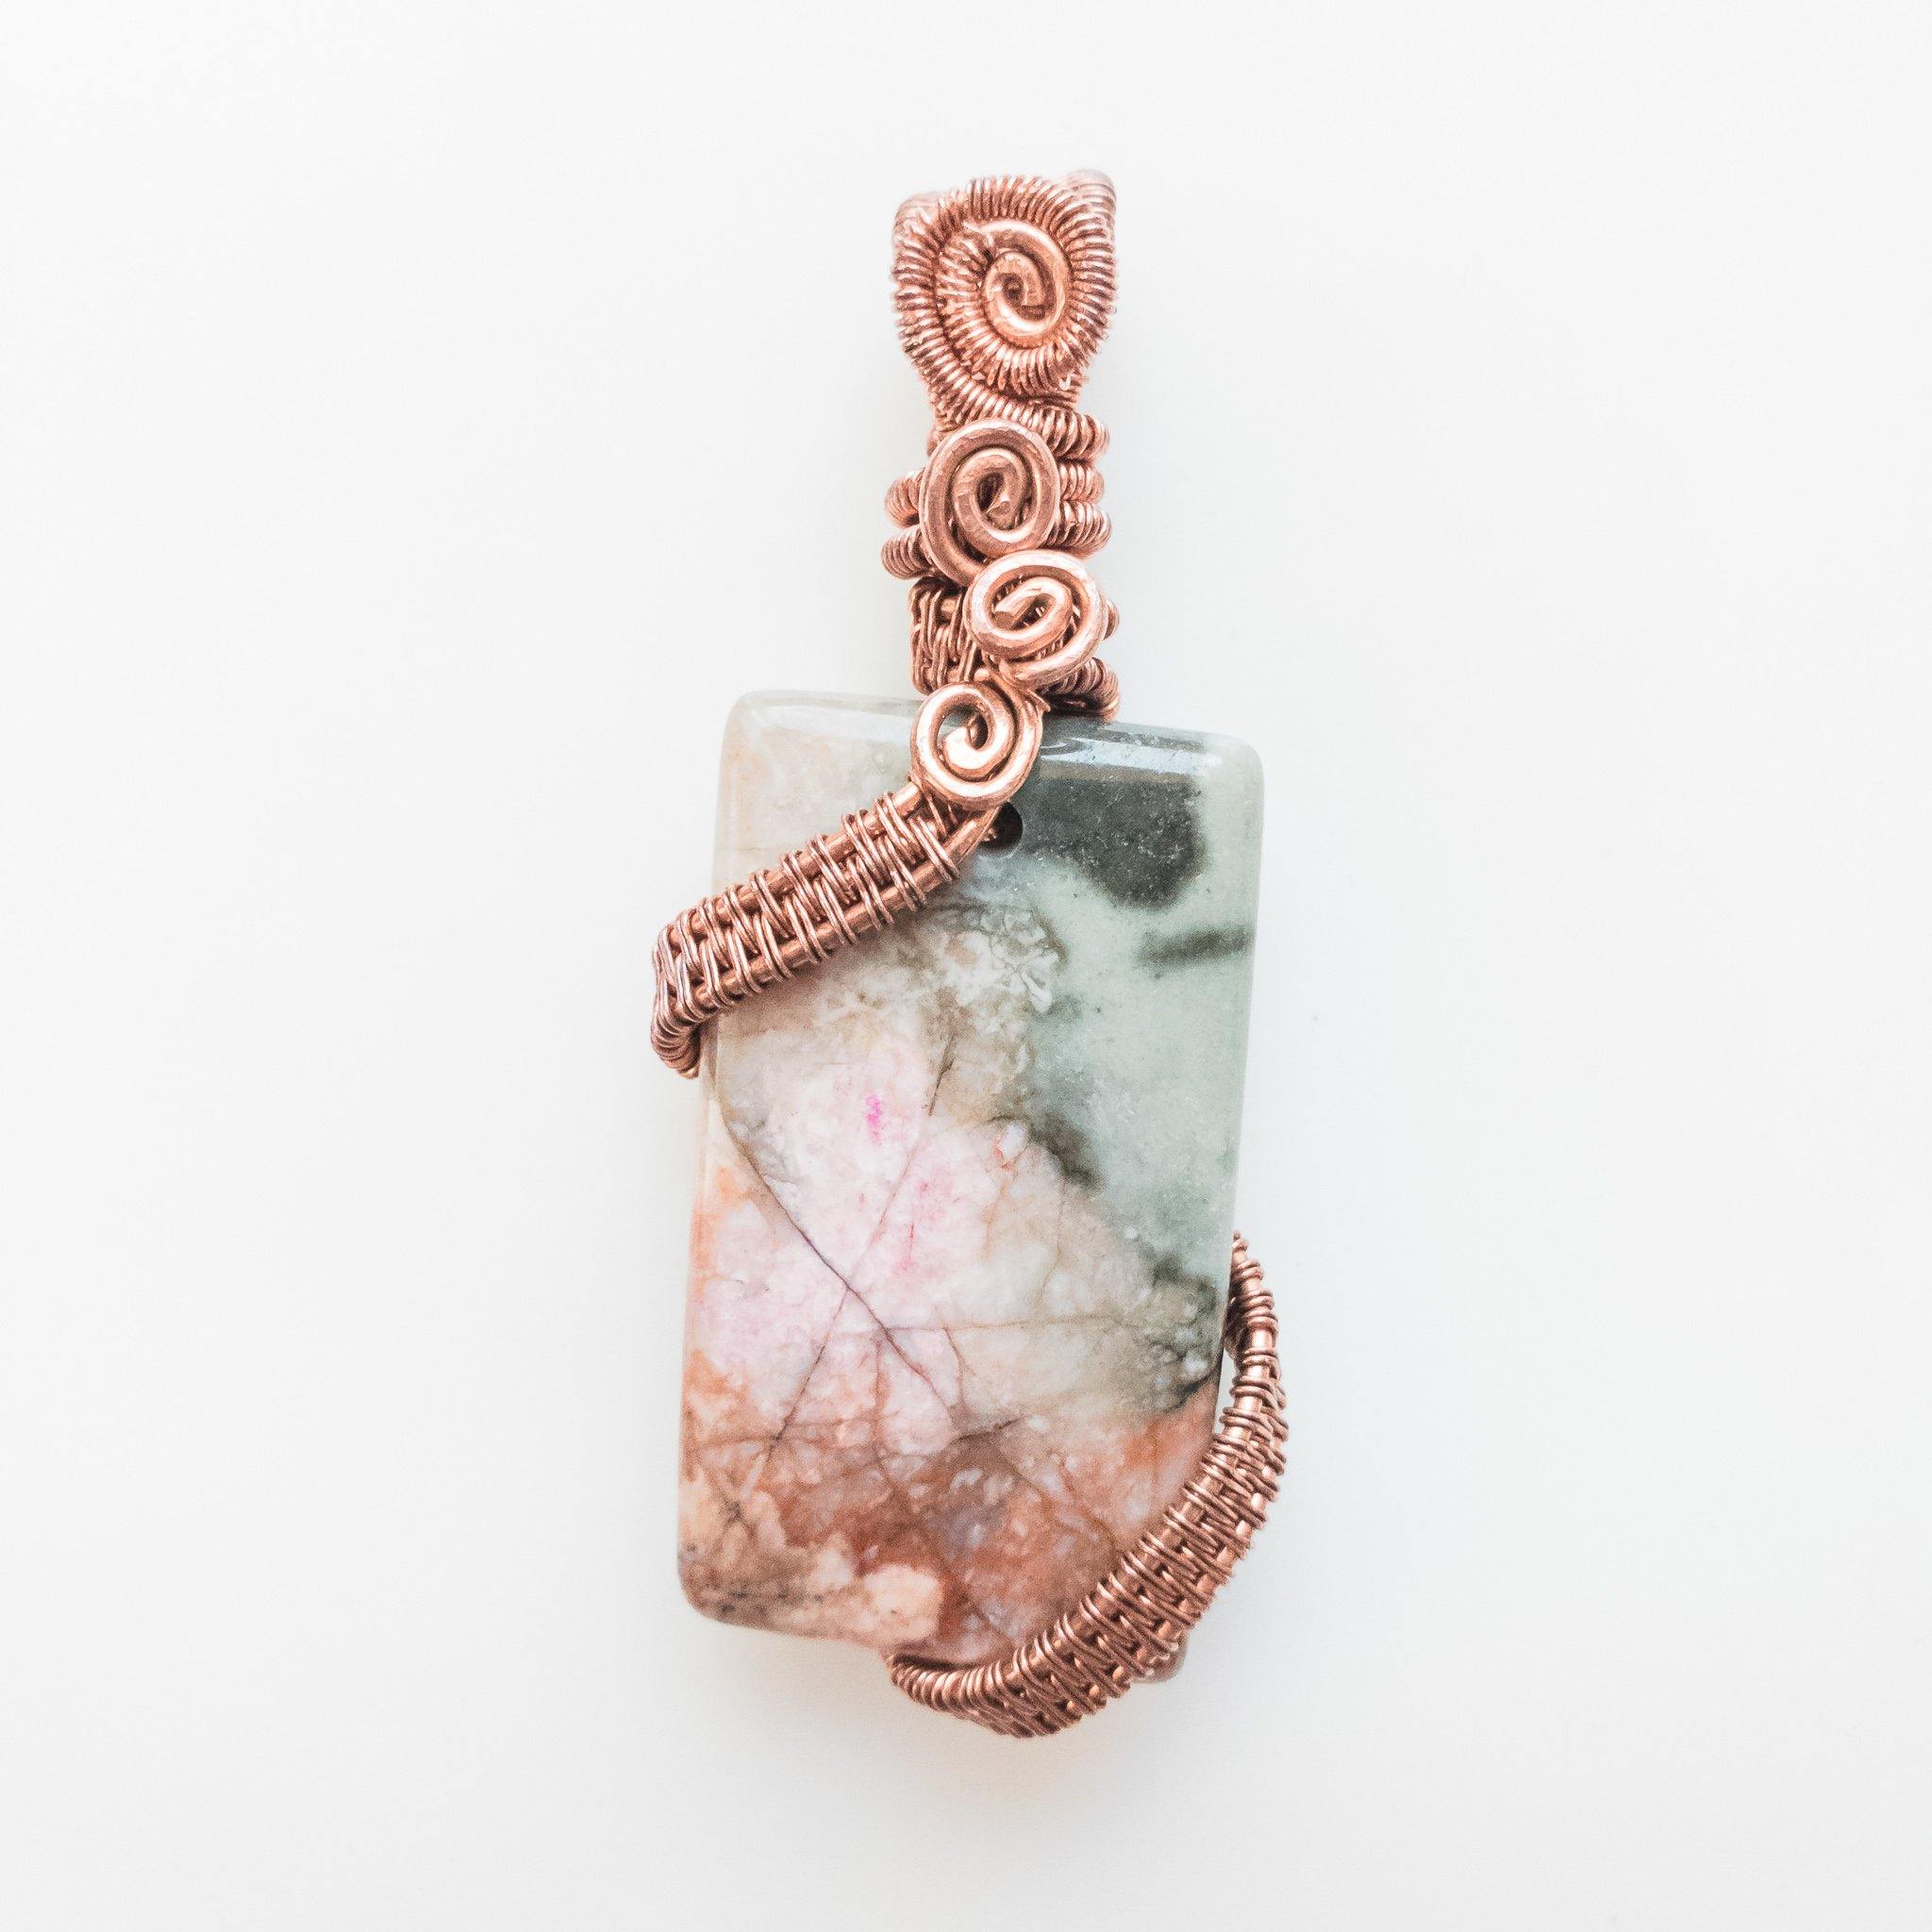 Magnolia Collection~ Rhodonite Pendant Necklace designed in Antique Copper - front view - BellaChel Jeweler